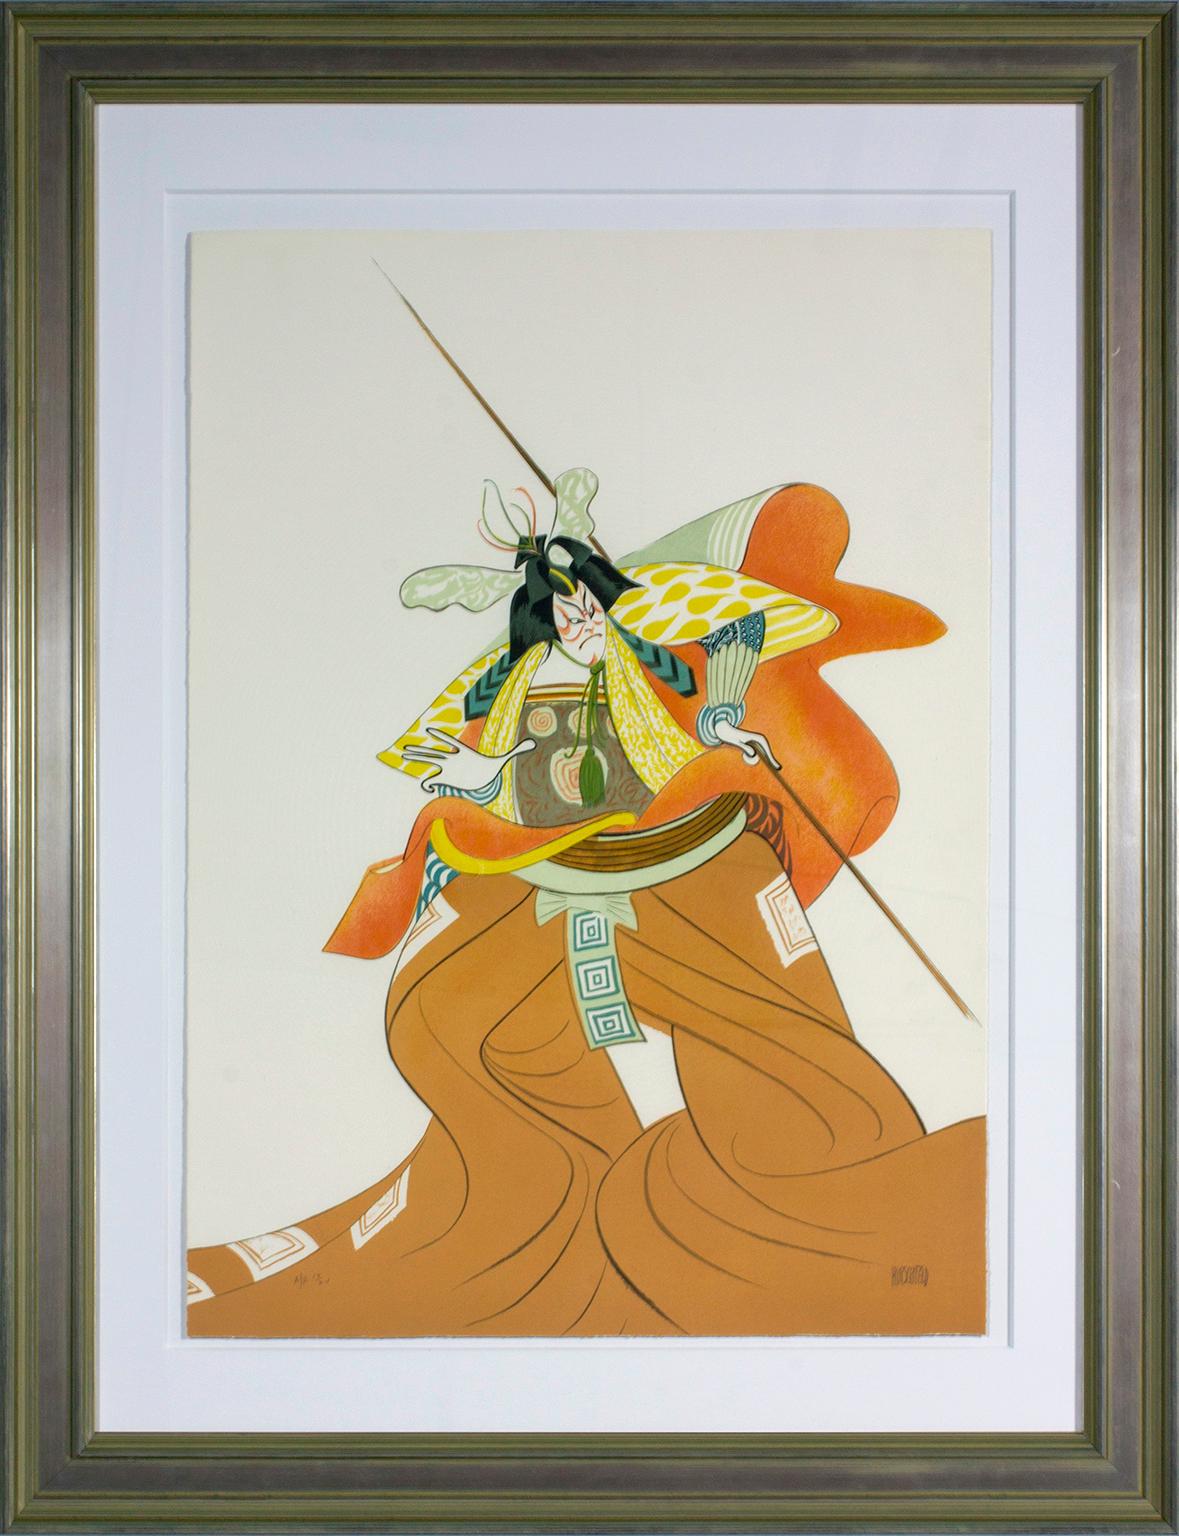 Albert Al Hirschfeld Portrait Print - "Shibaraku" framed, hand-signed lithograph from "Kabuki Suite" by Al Hirschfeld